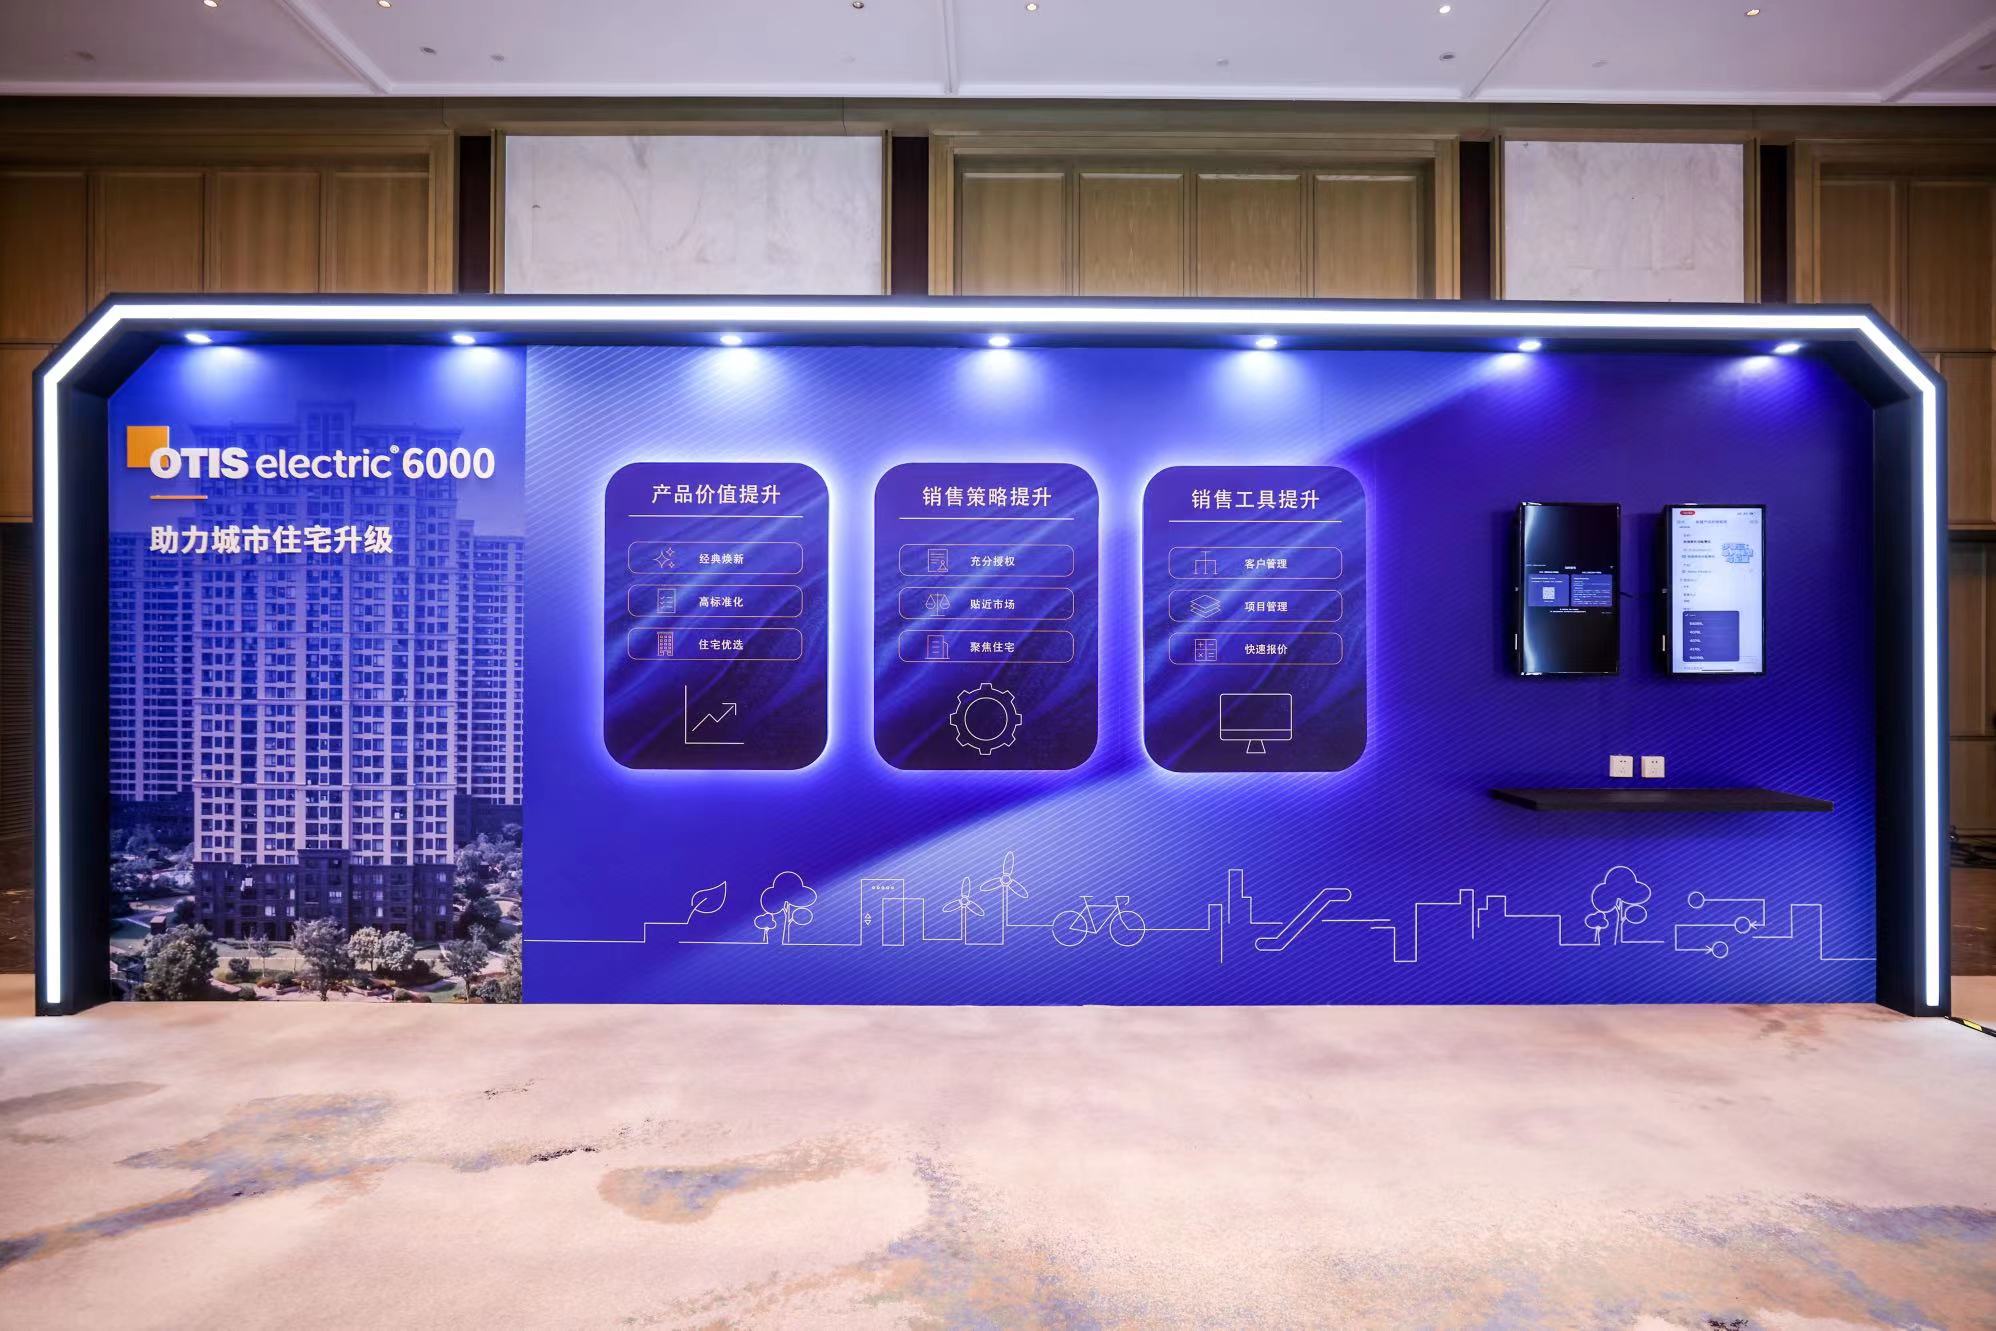 OTIS electric® 8000崭新智能电梯 “全新为您”面向城市发展设计图3